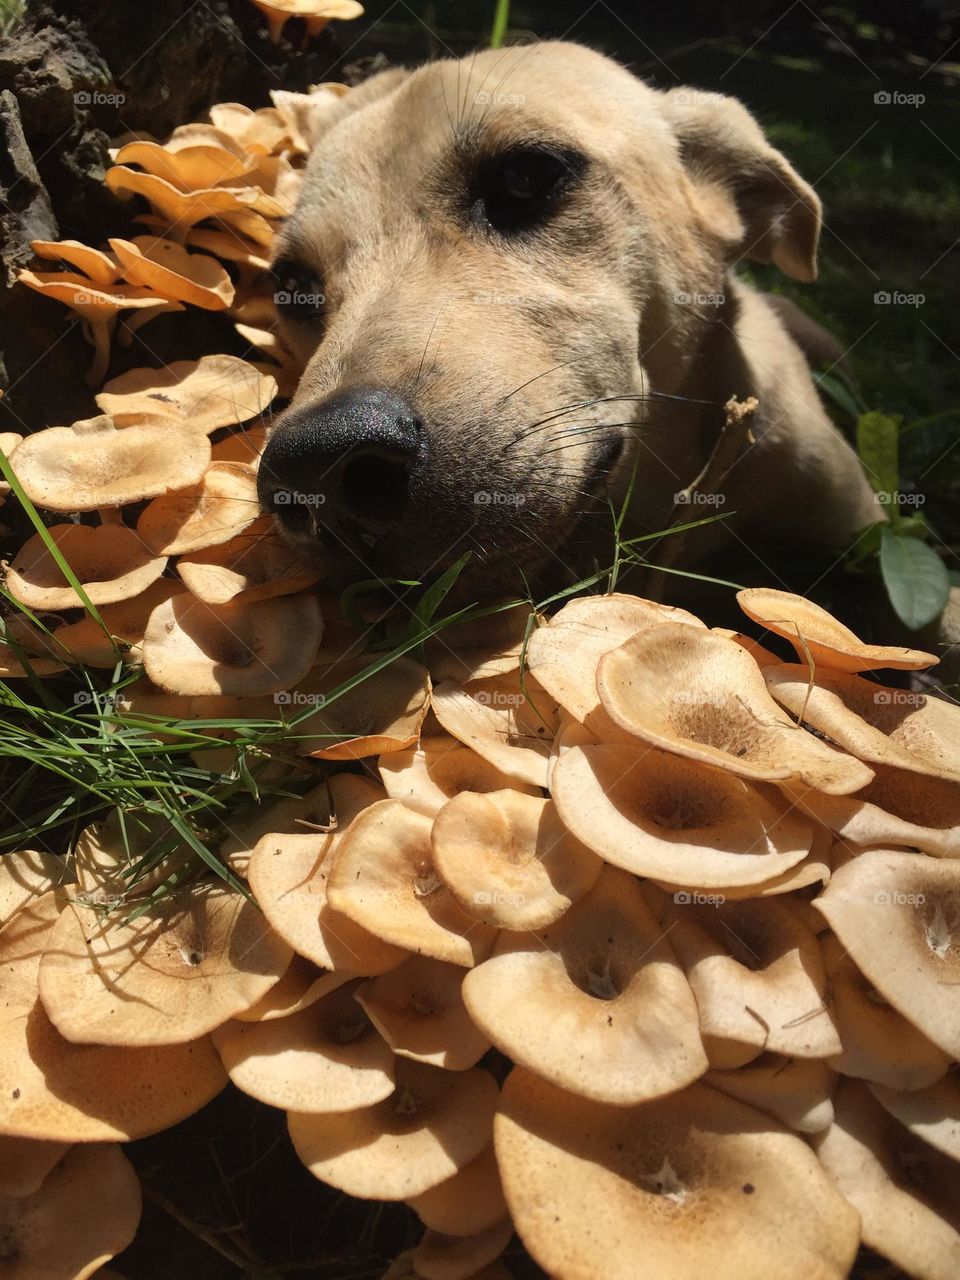 Mushrooms and the feeling fungi doggy